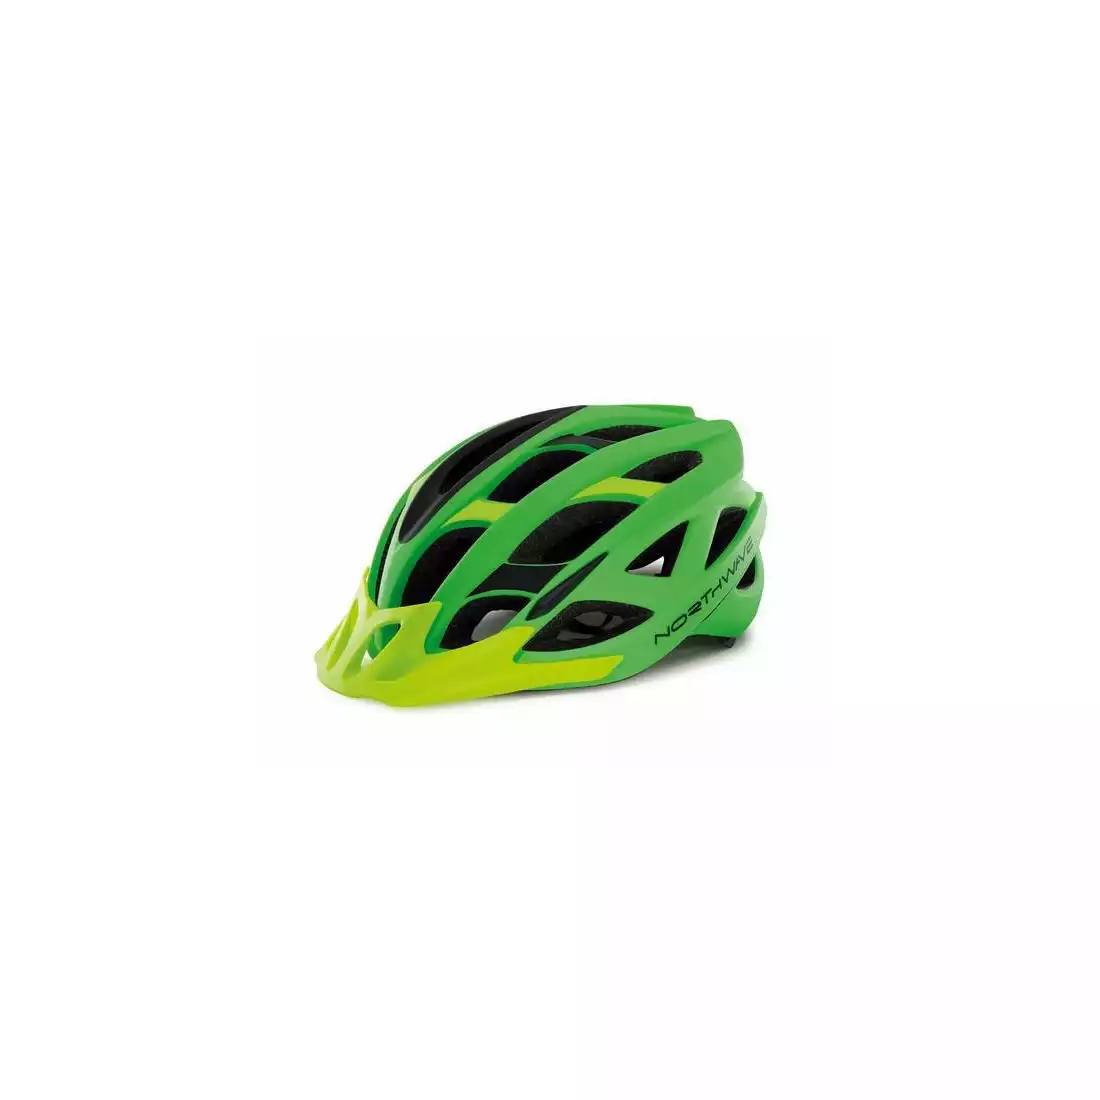 NORTHWAVE RANGER kask rowerowy, zielony